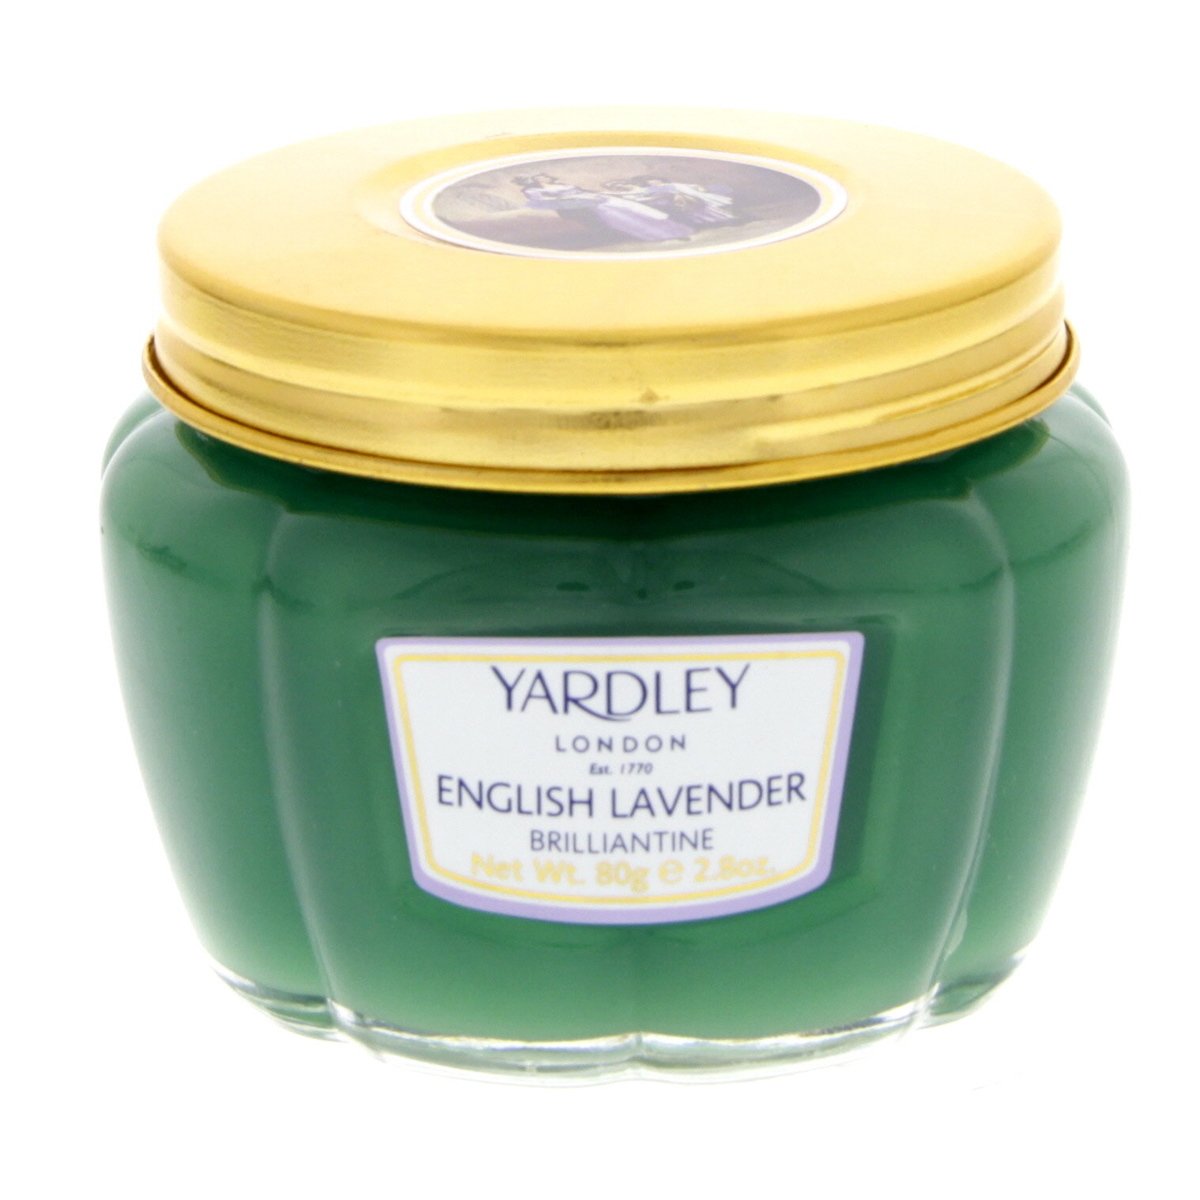 Yardley English Lavender Brilliantine Hair Cream 80 g